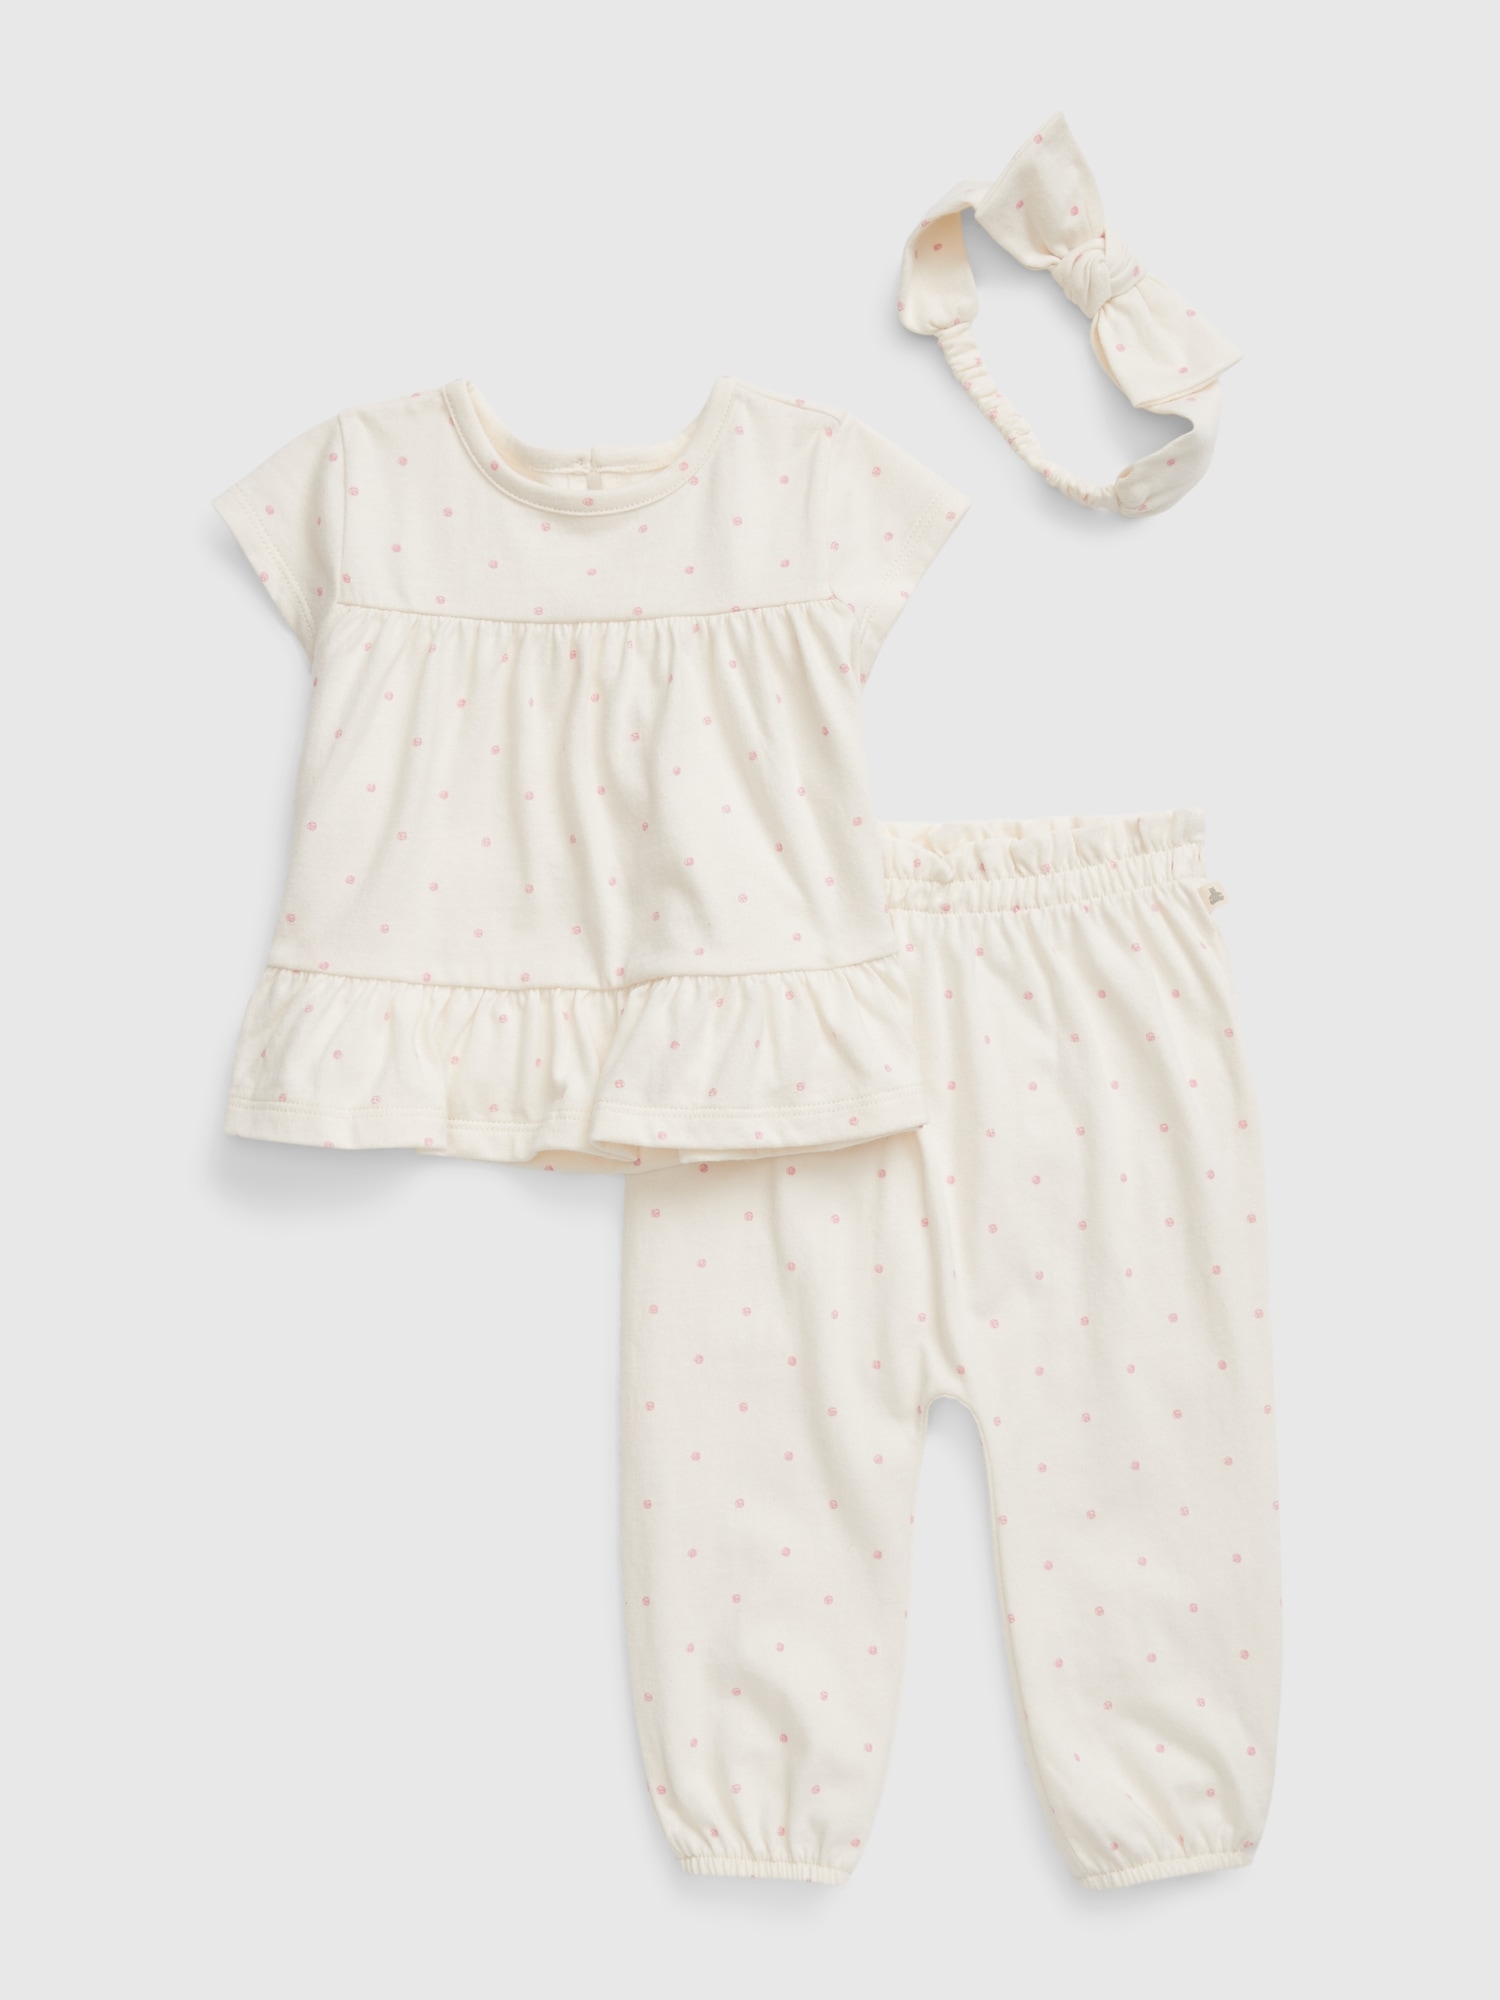 Baby 100% Organic Cotton 3-Piece Outfit Set | Gap